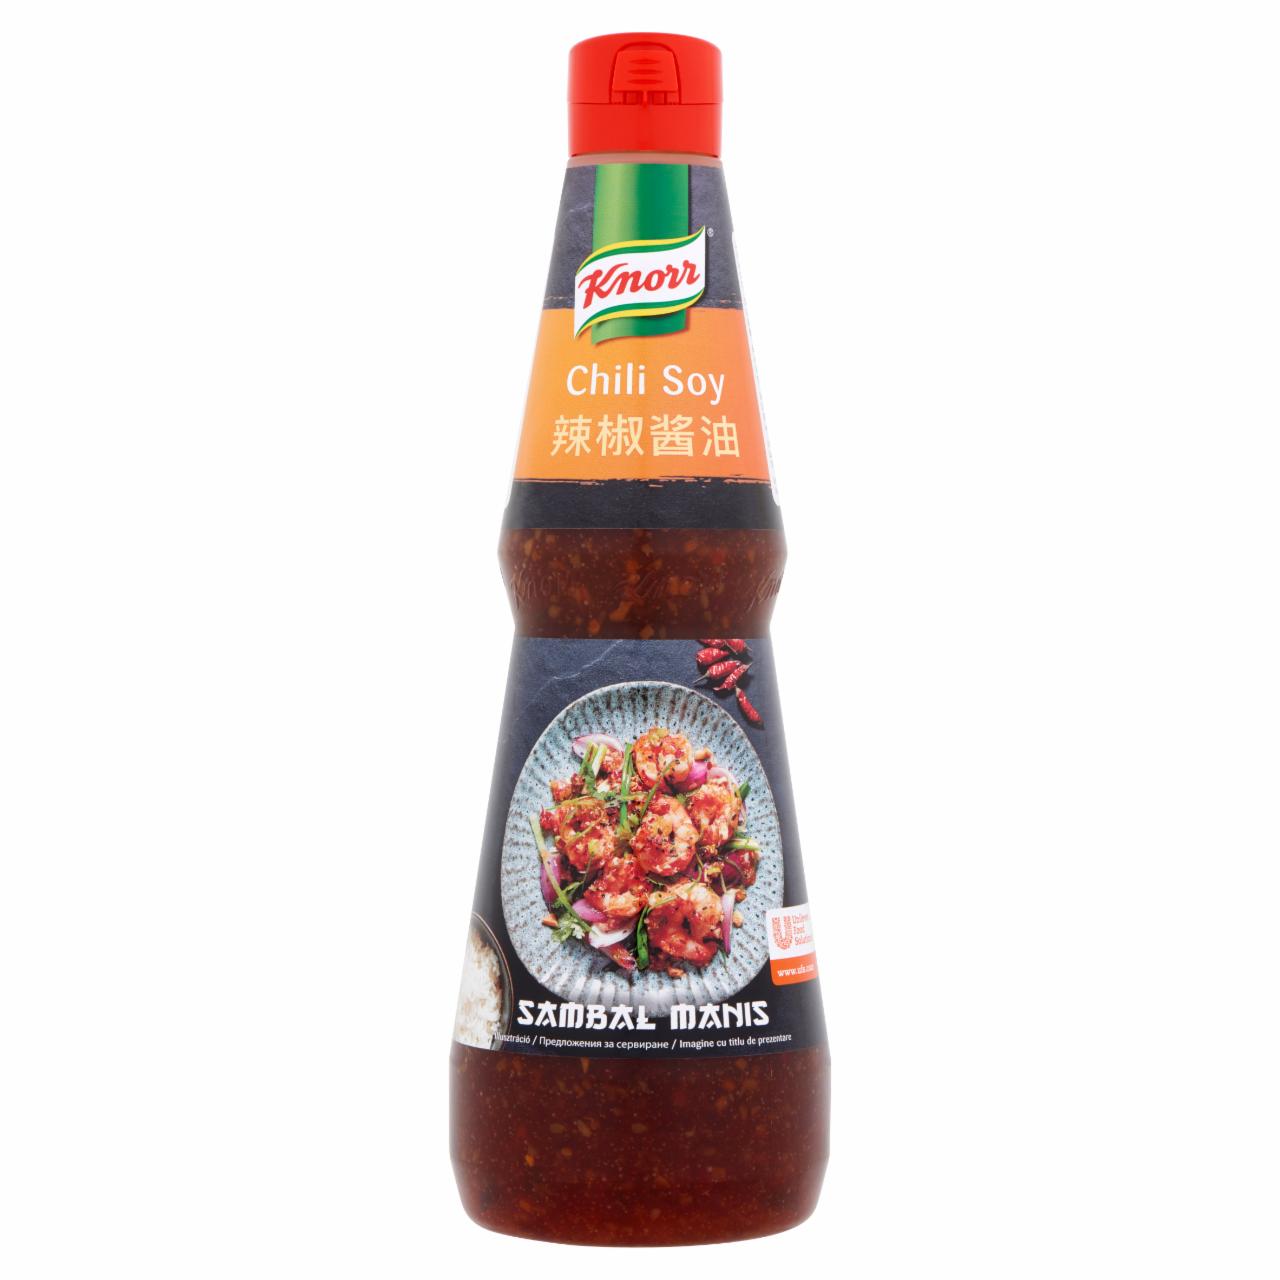 Képek - Knorr Sambal Manis chili-szója szósz 1 l